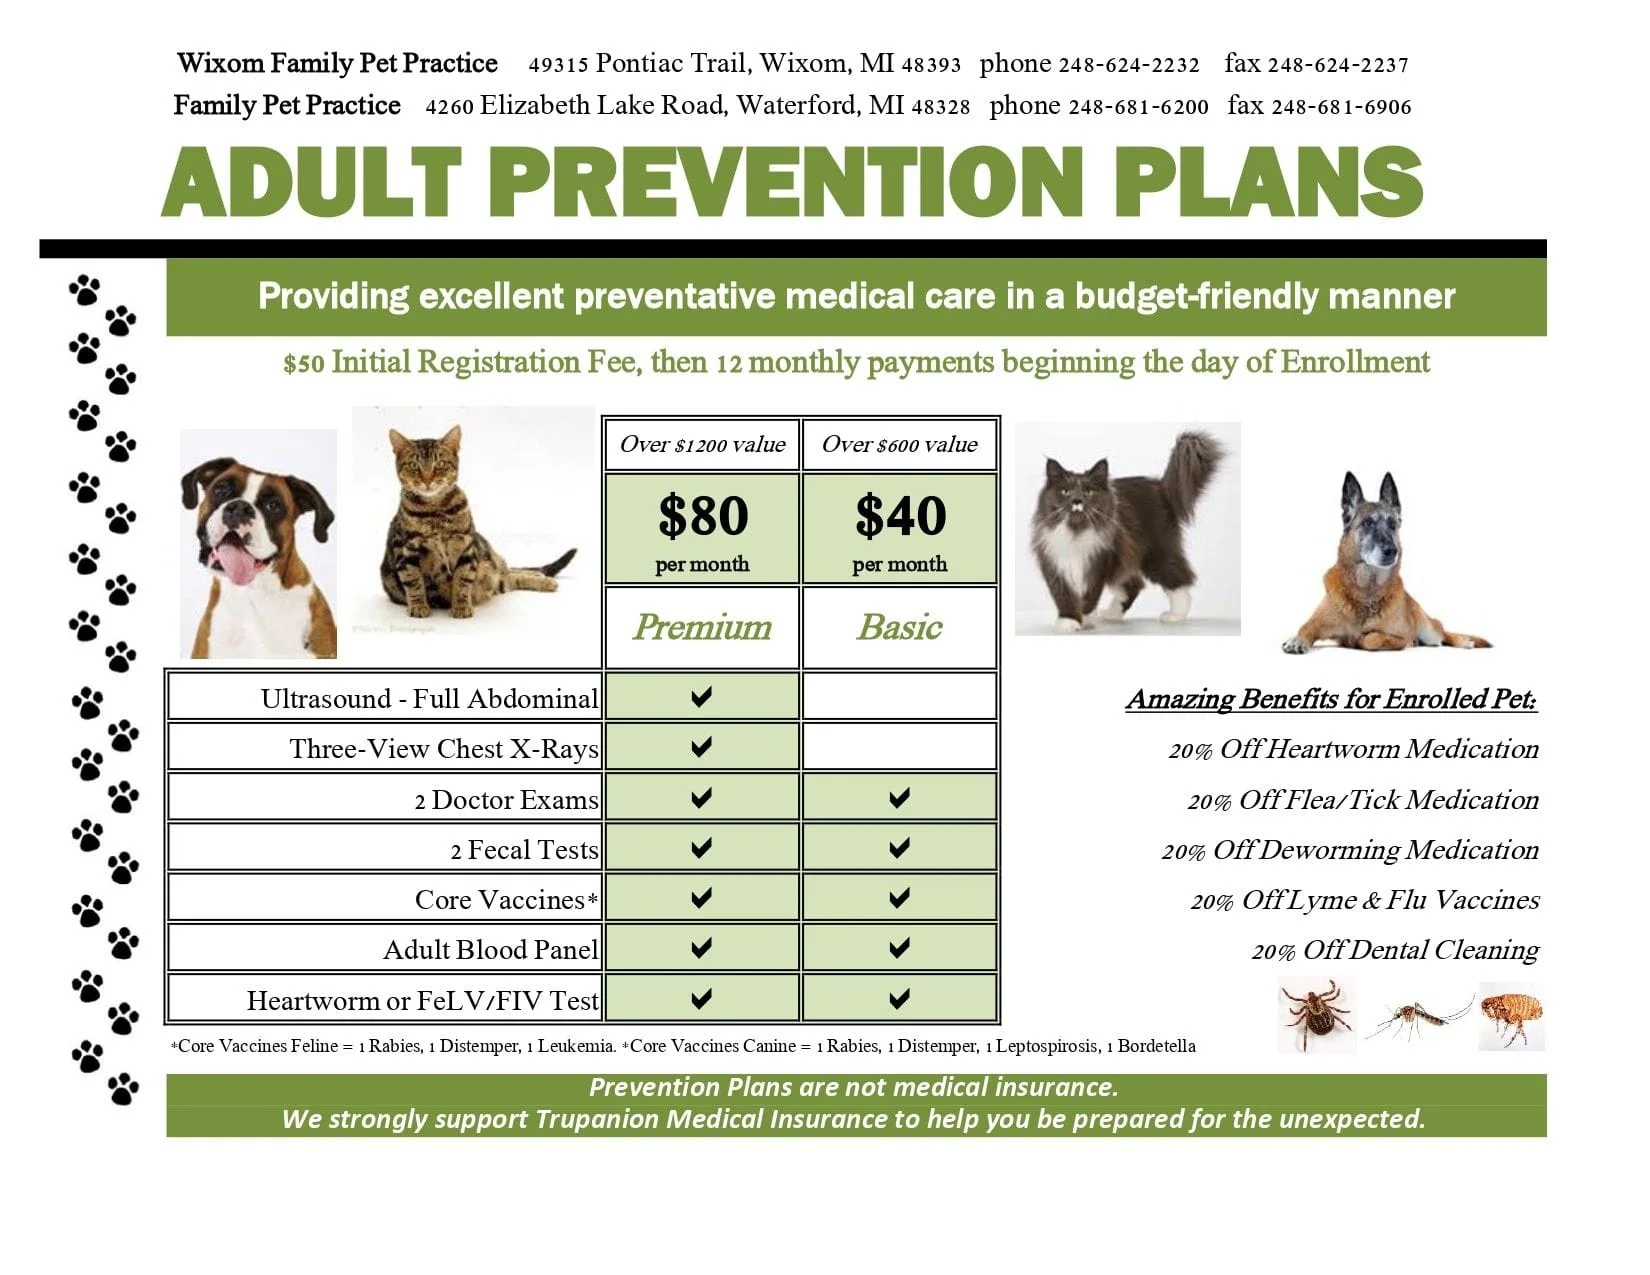 Adult Prevention Plans